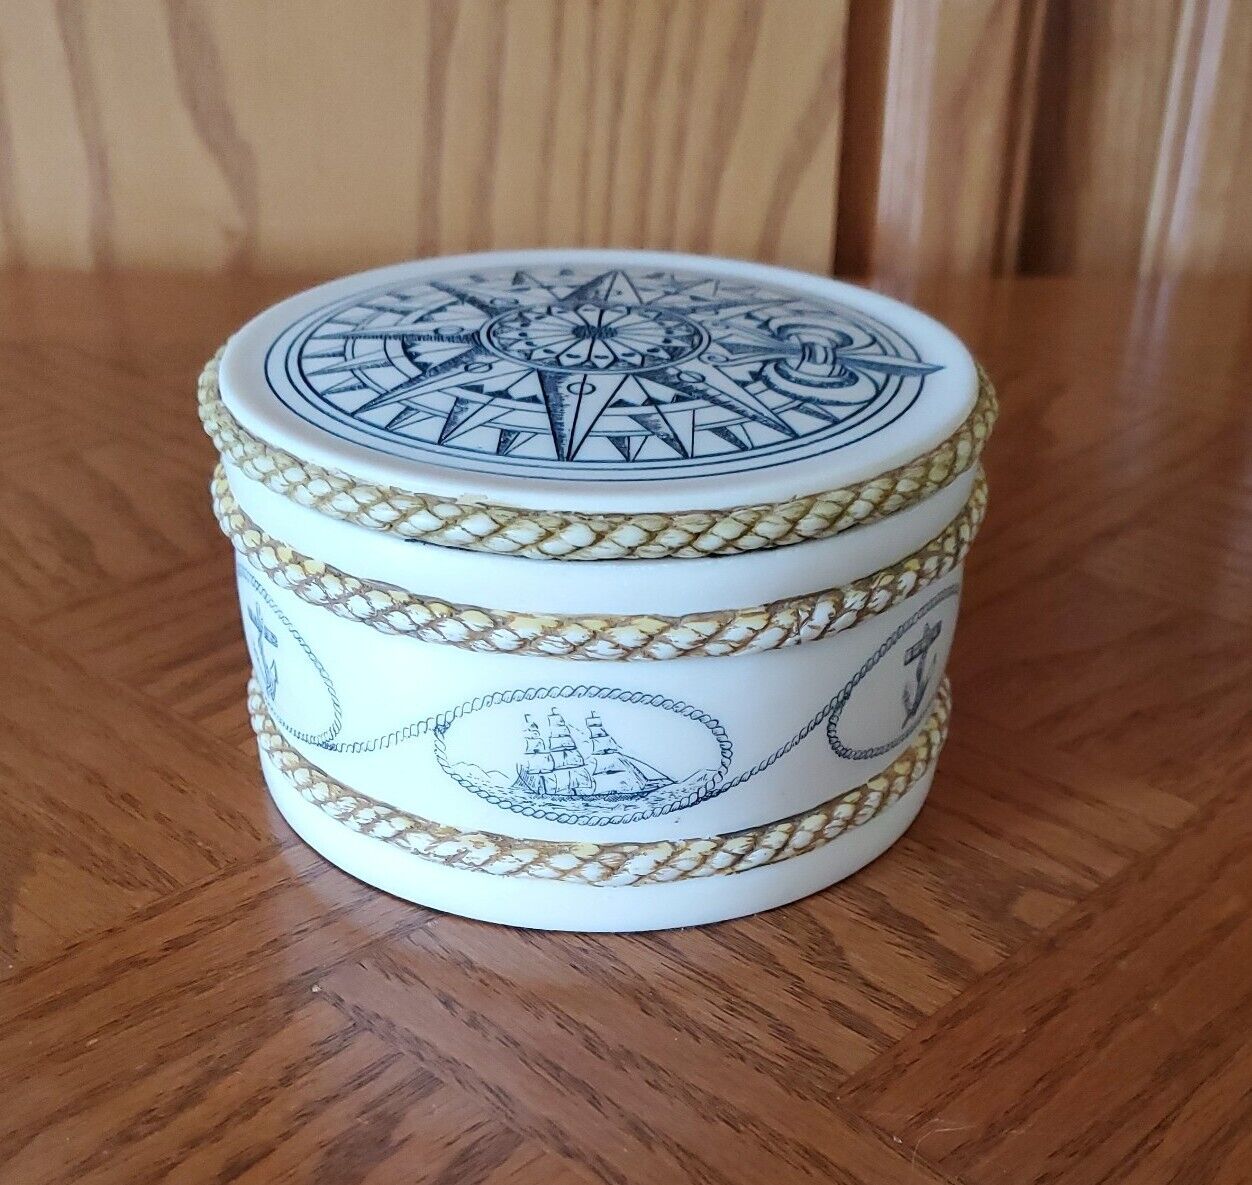 Nautical Trinket Jewelry Box White Embossed Ceramic Pottery Round Ship Design